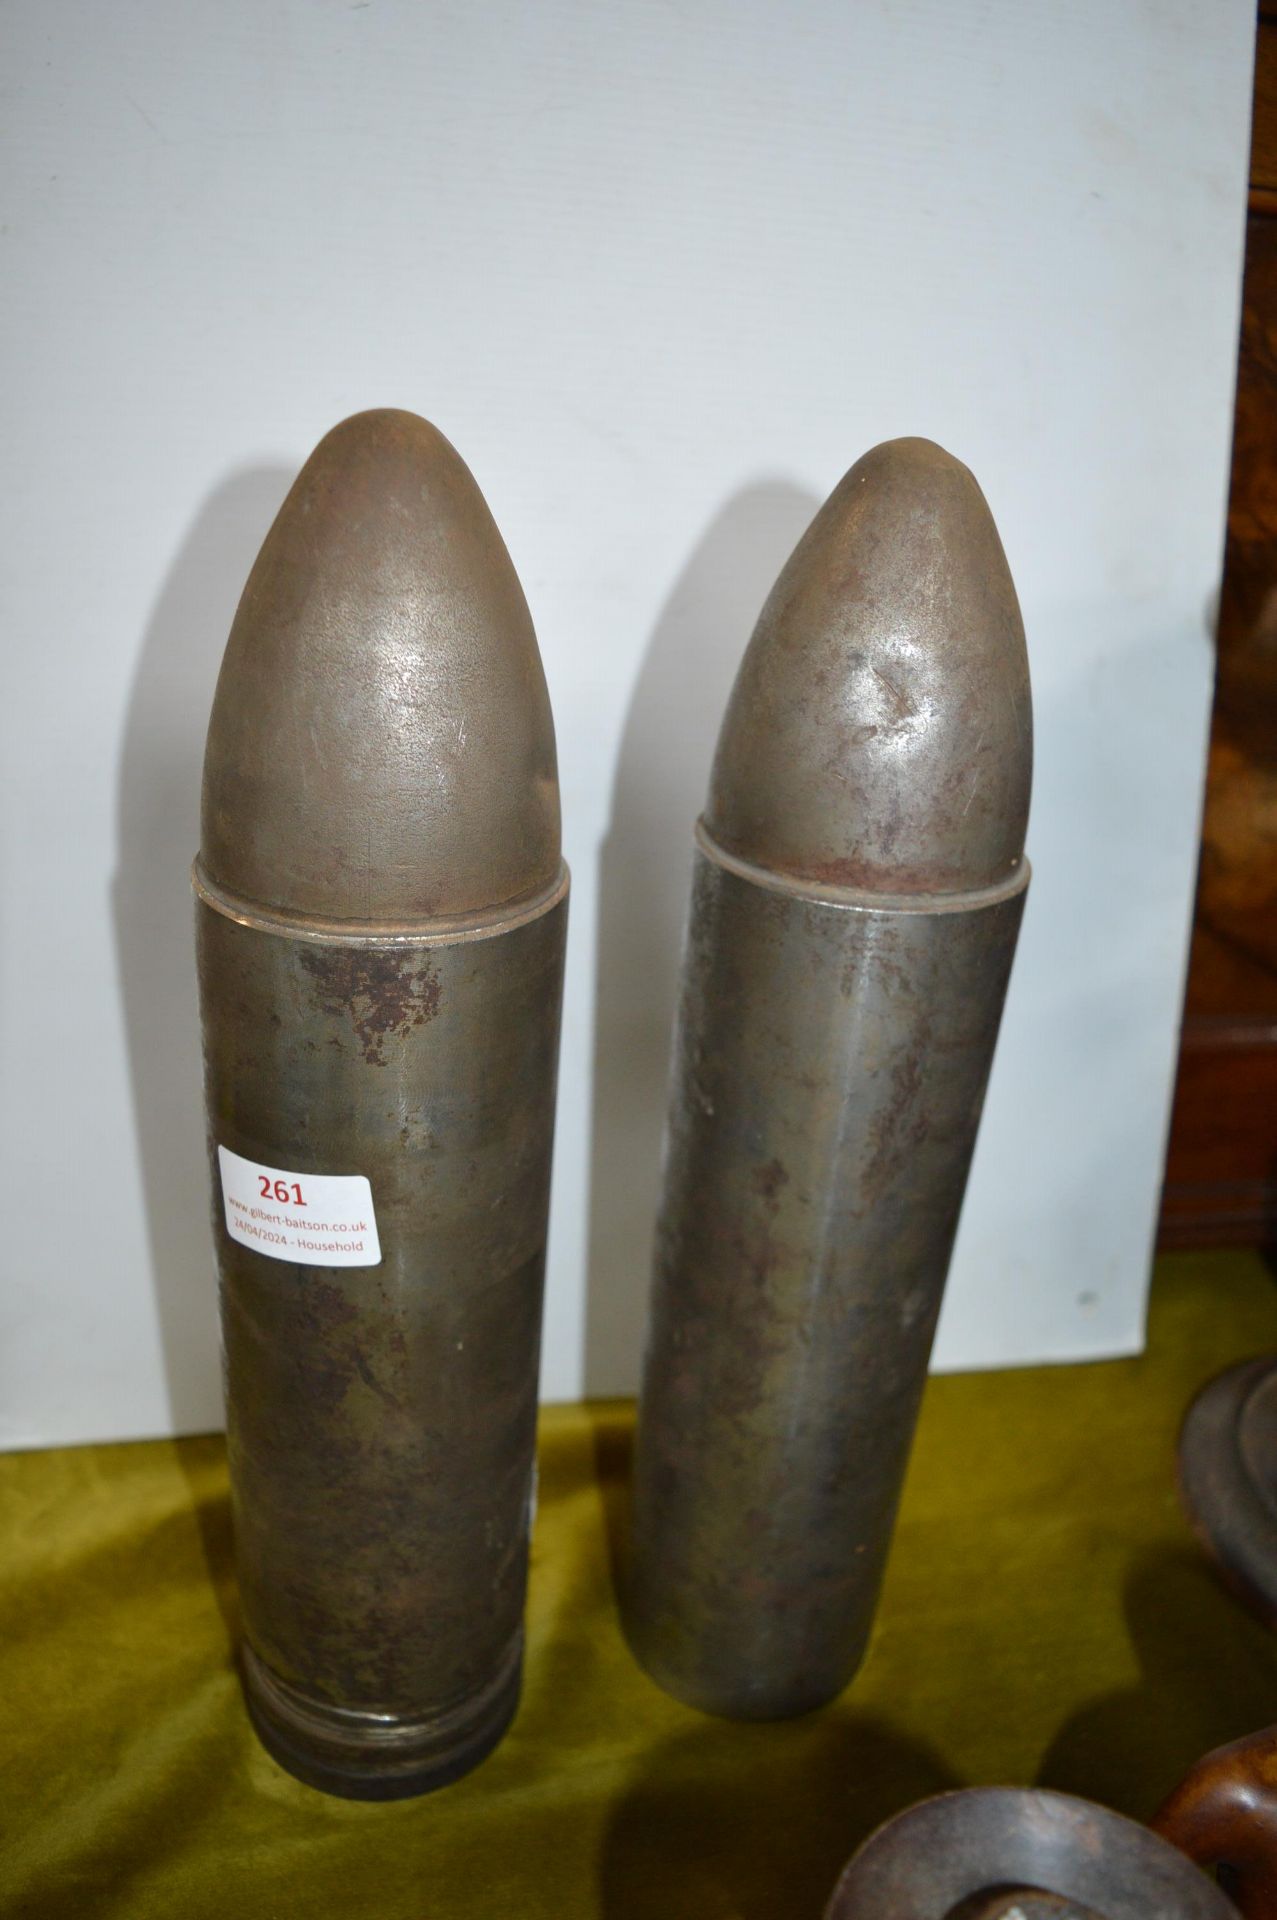 Pair of Artillery Shell Cases